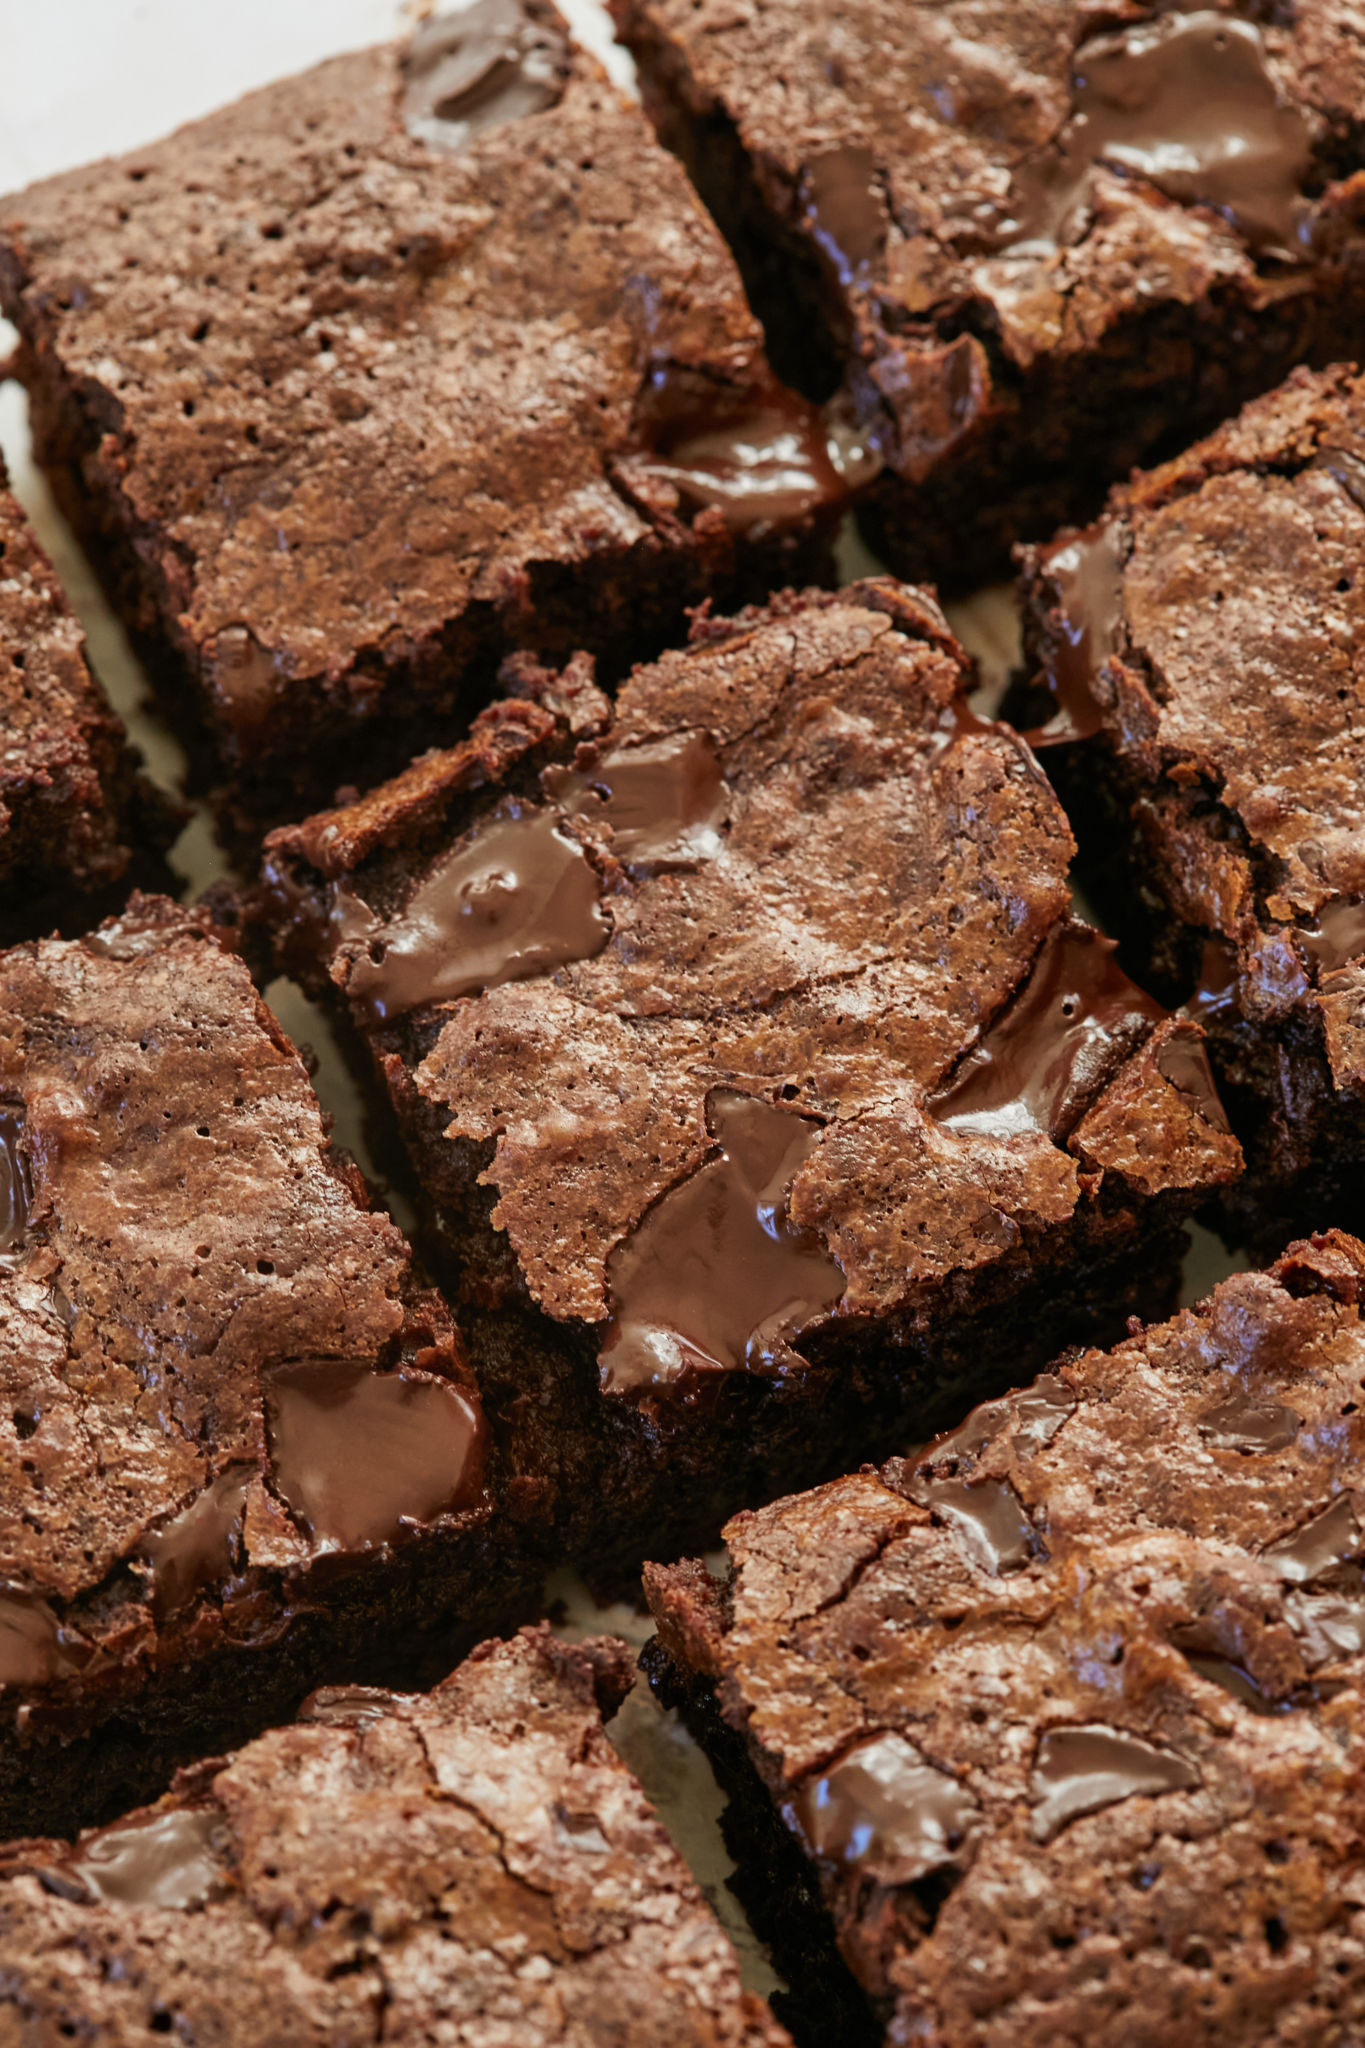 Crinkle Top Brownies cut into squares.